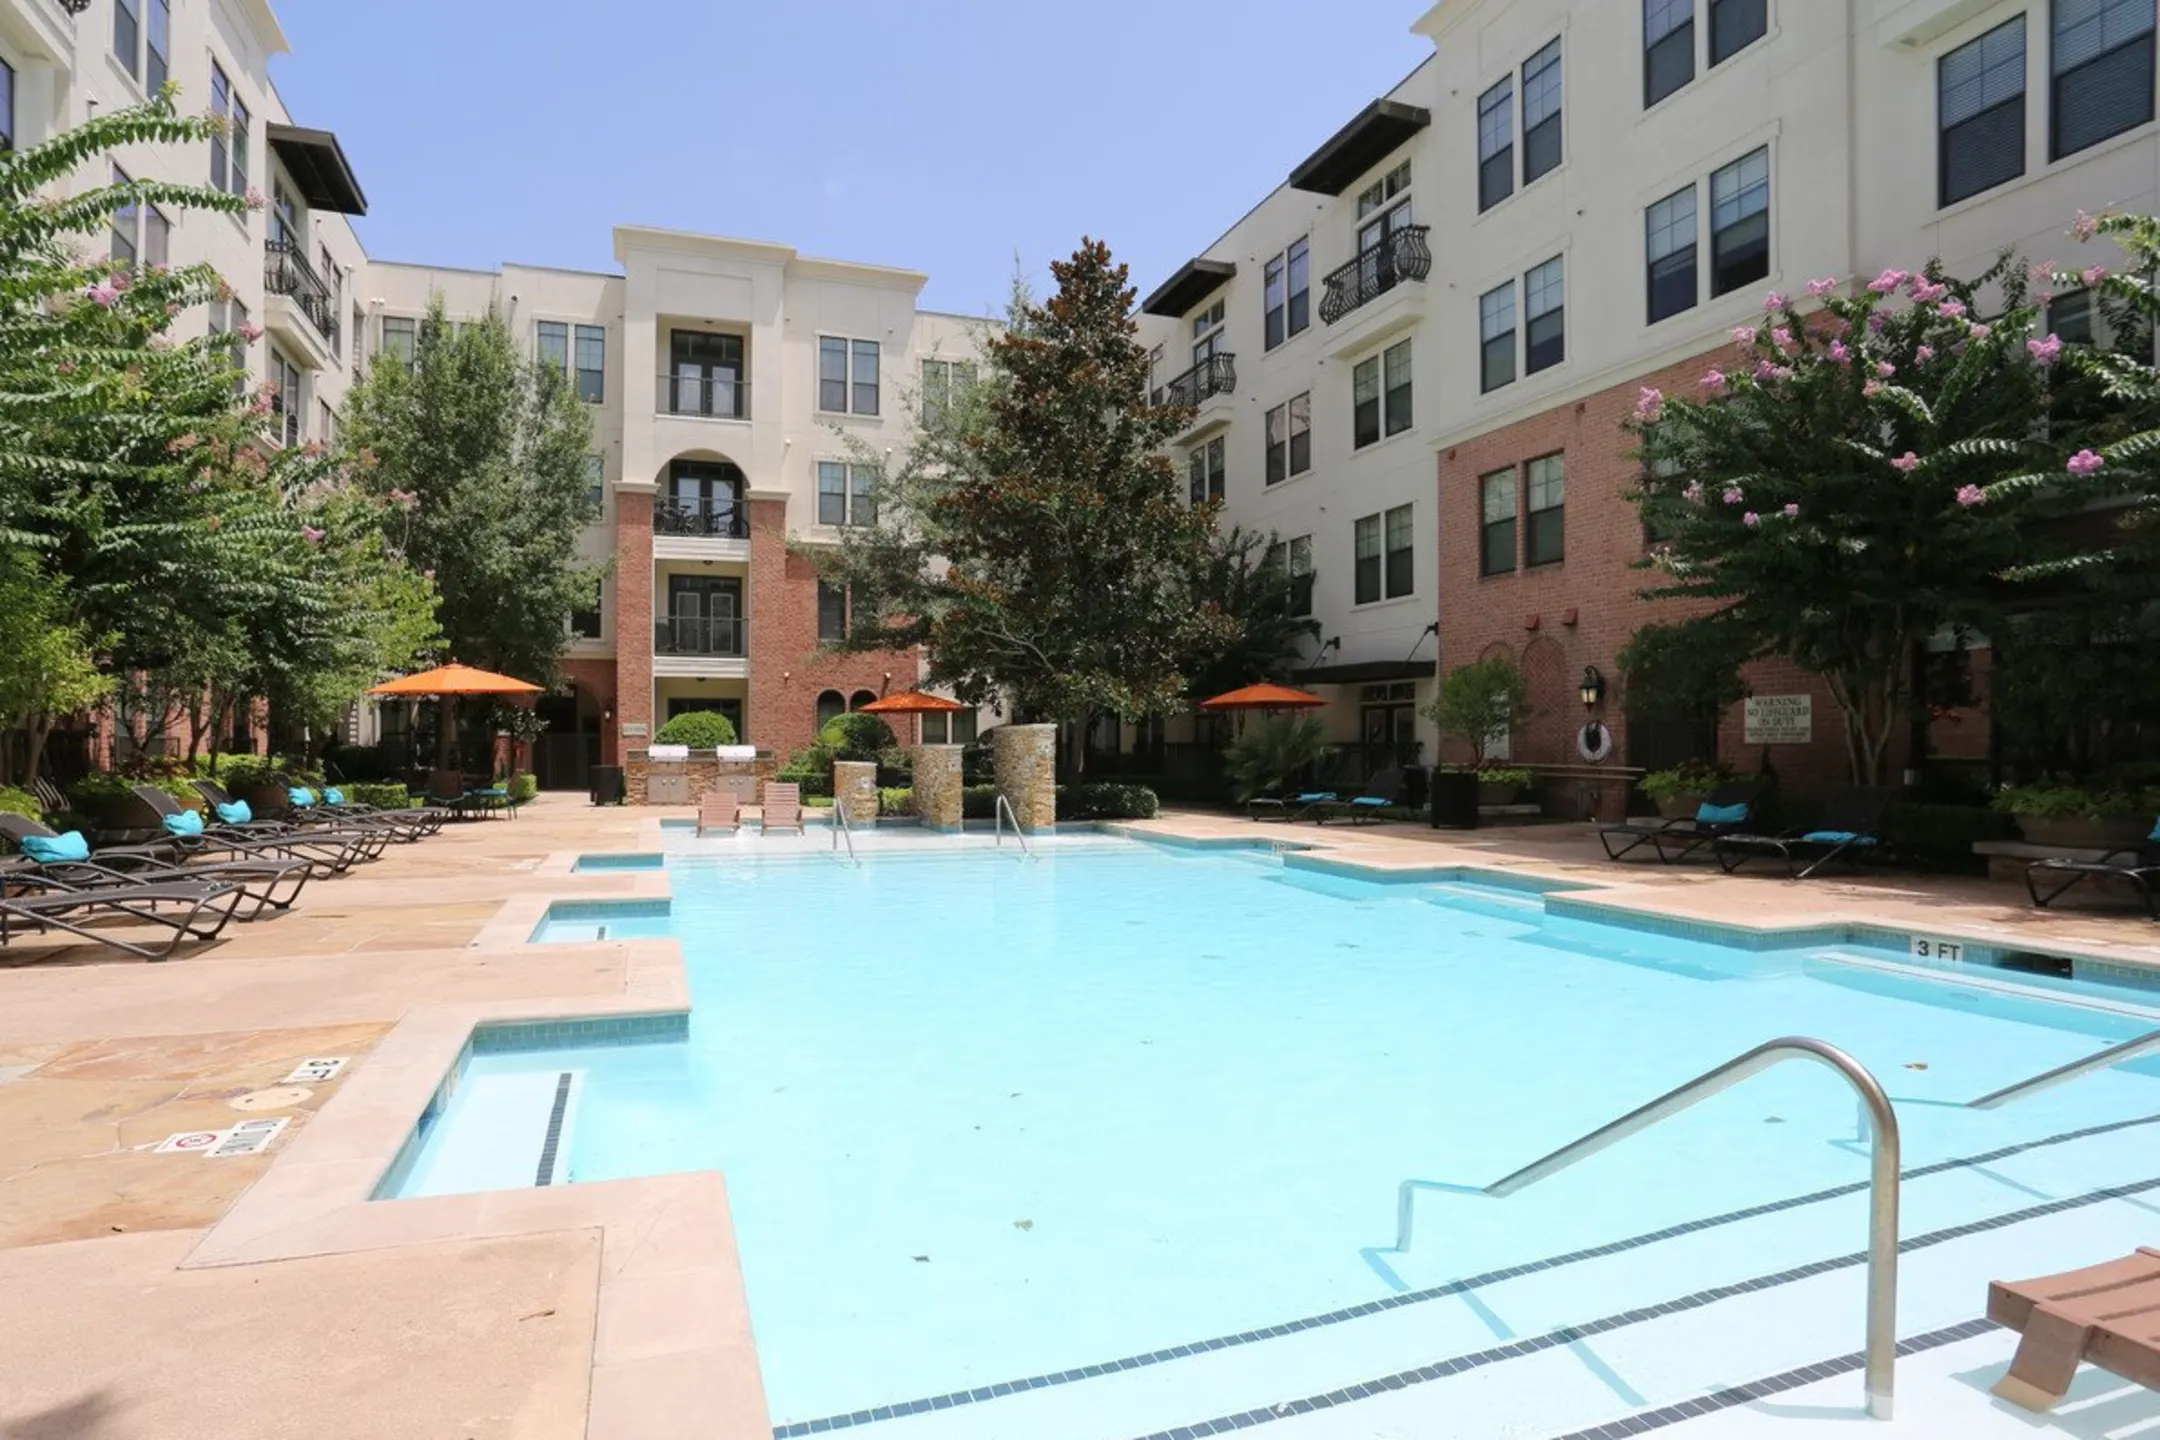 Pool - 77061 Luxury Properties - Houston, TX